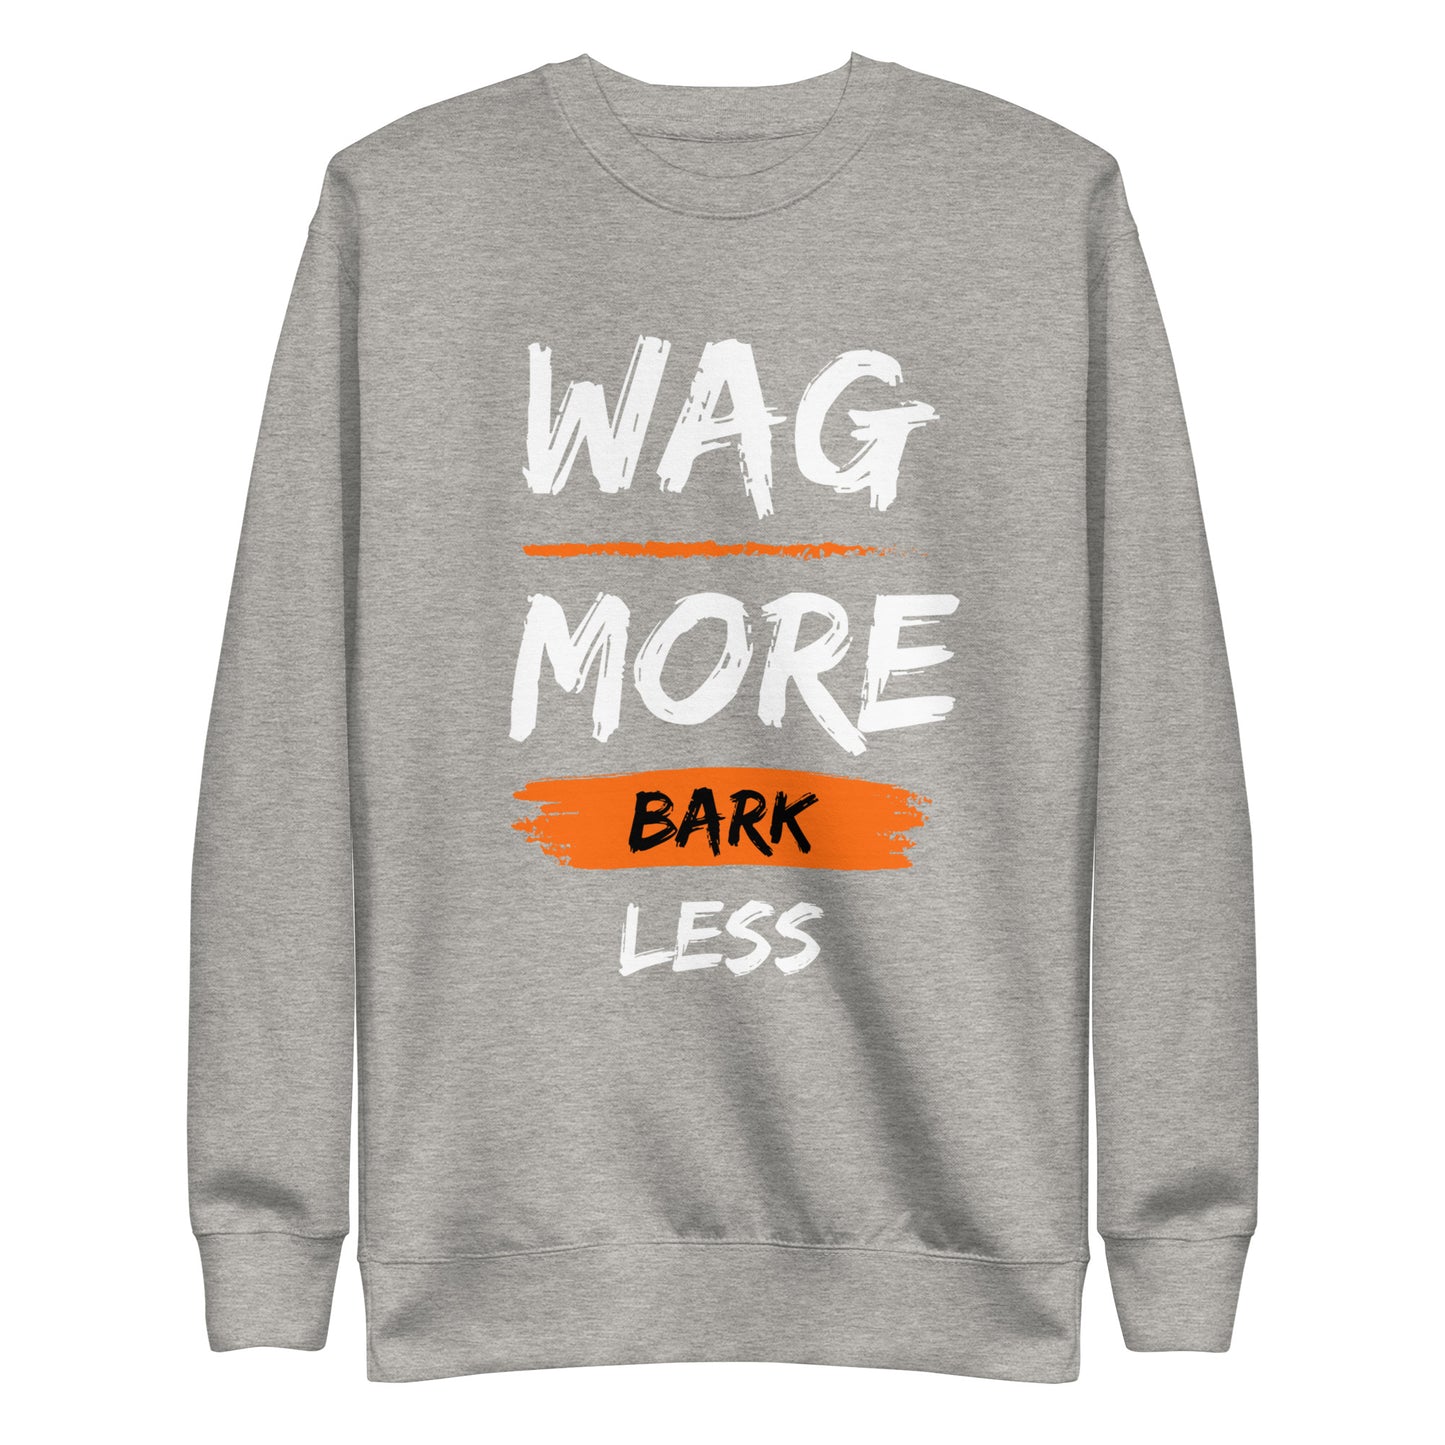 Wag More Bark Less Unisex Premium Sweatshirt